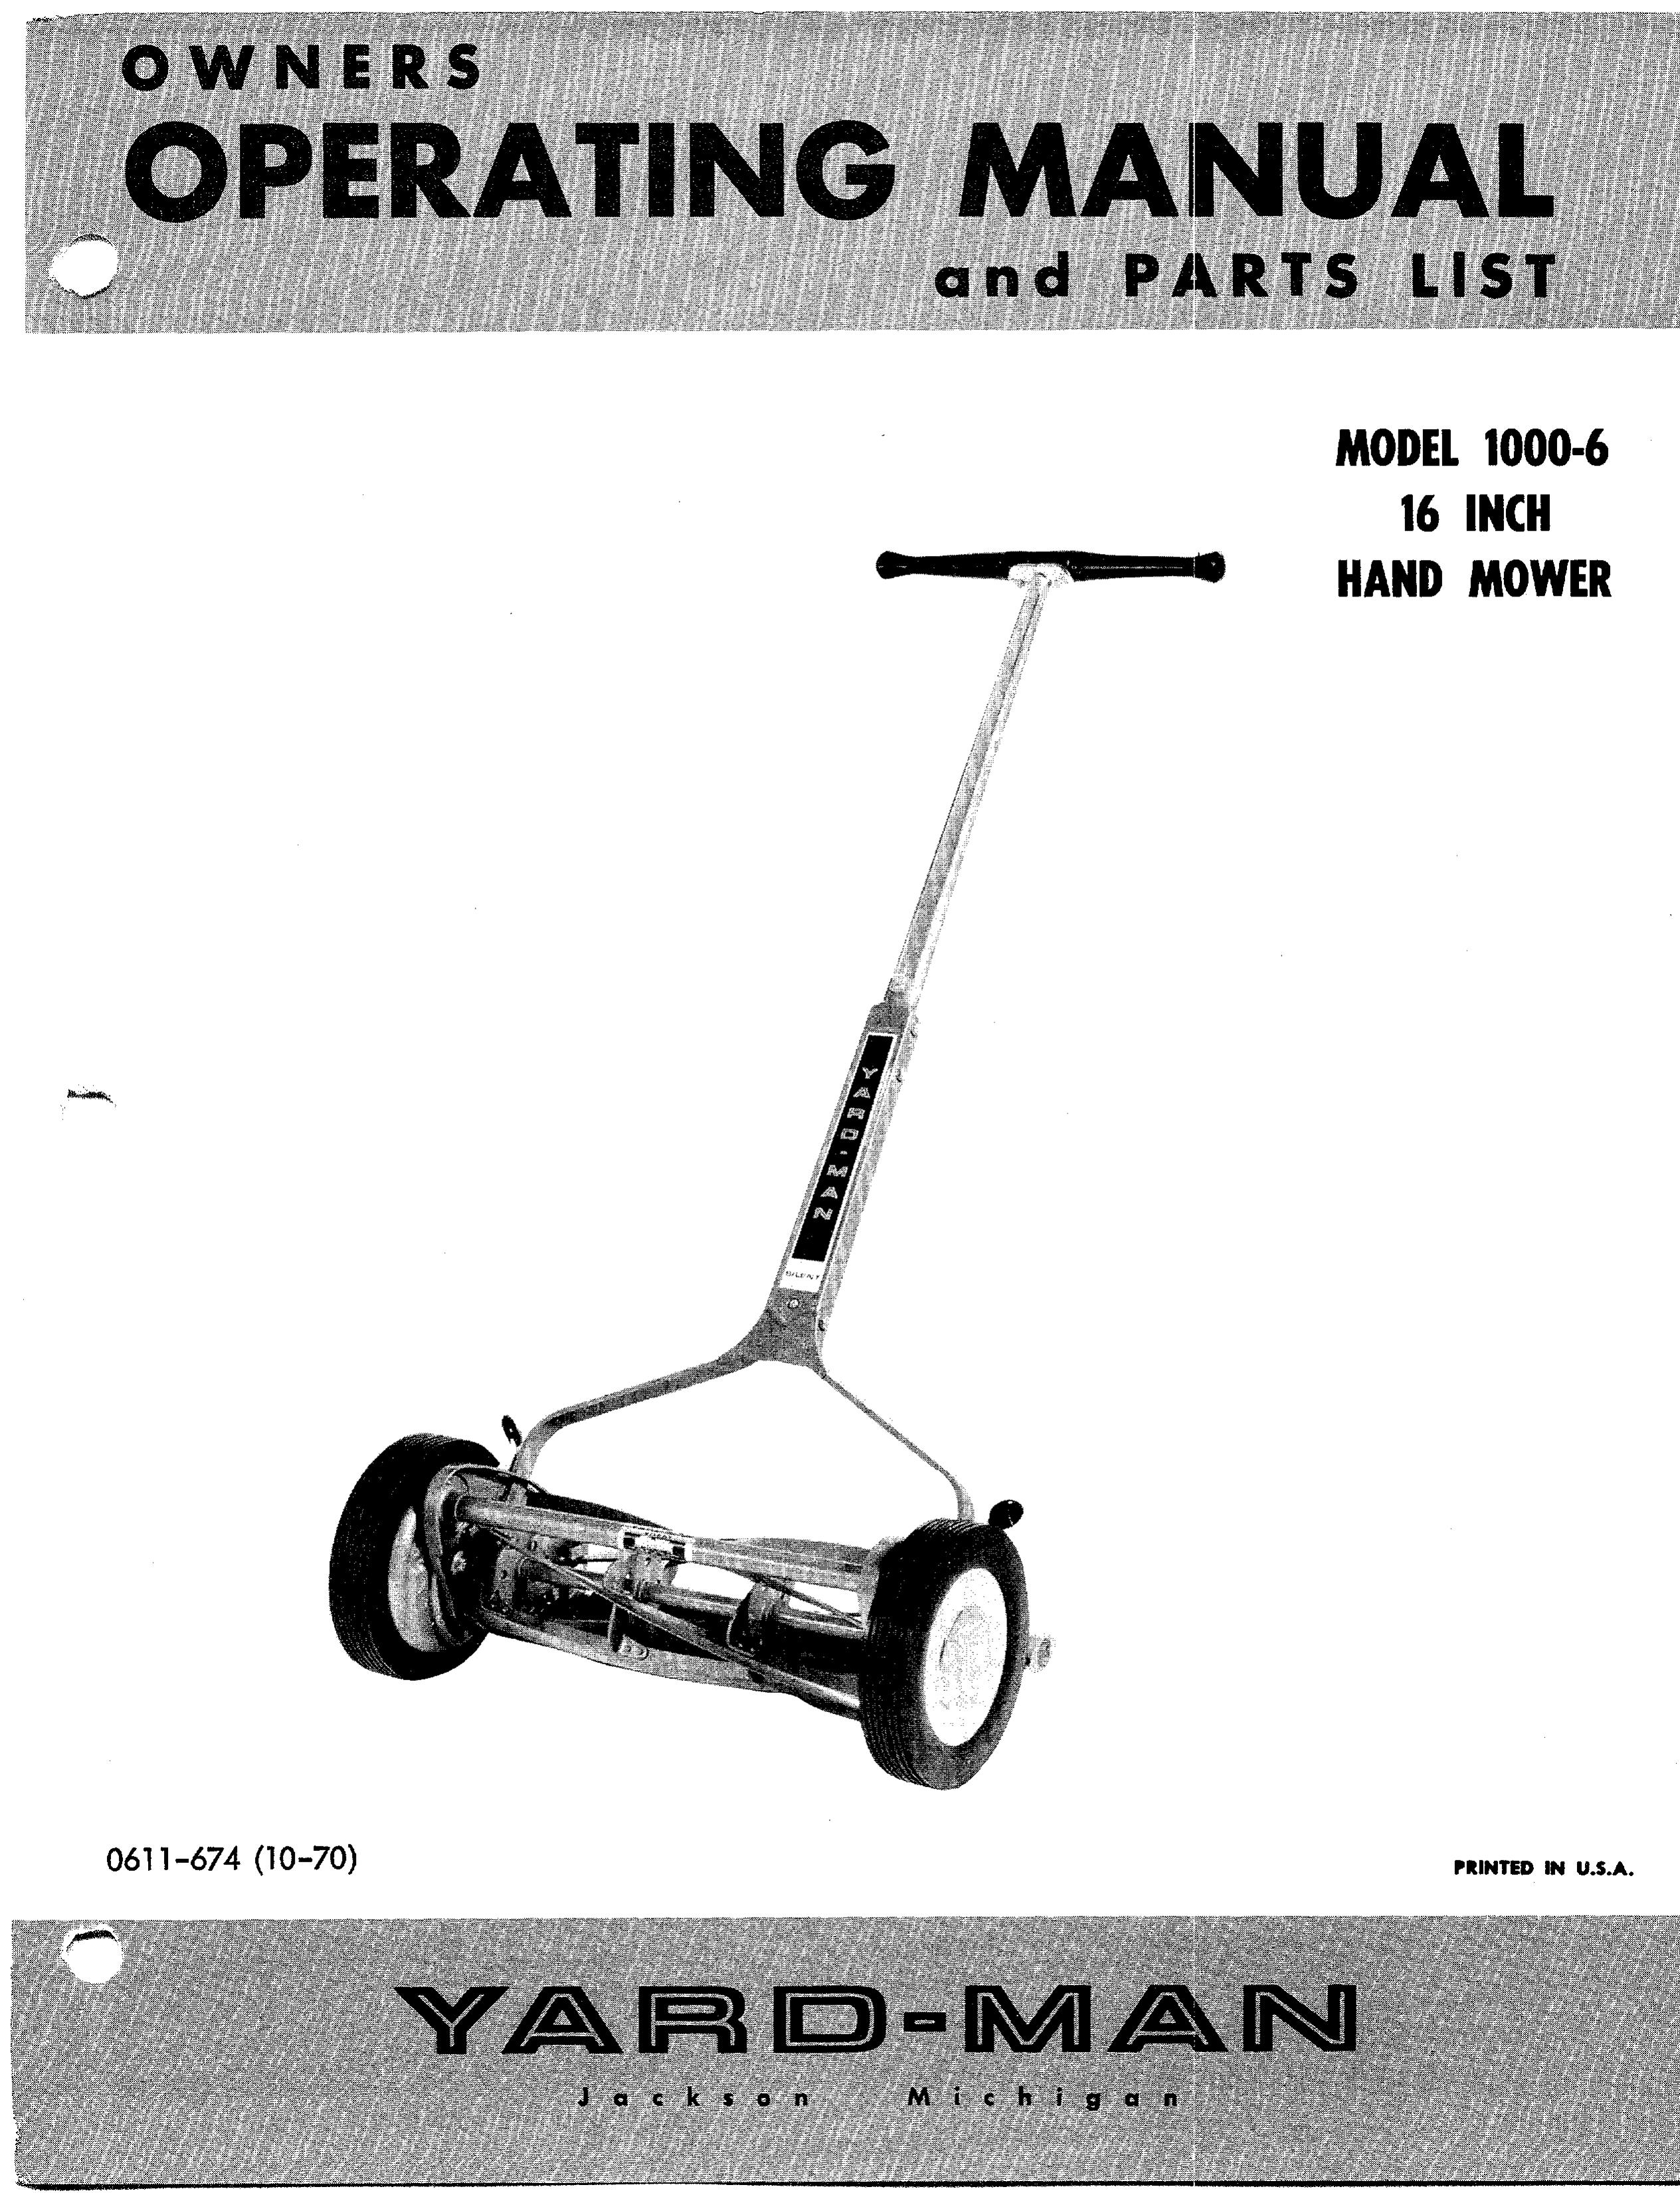 Yard-Man 1000-6 Lawn Mower User Manual